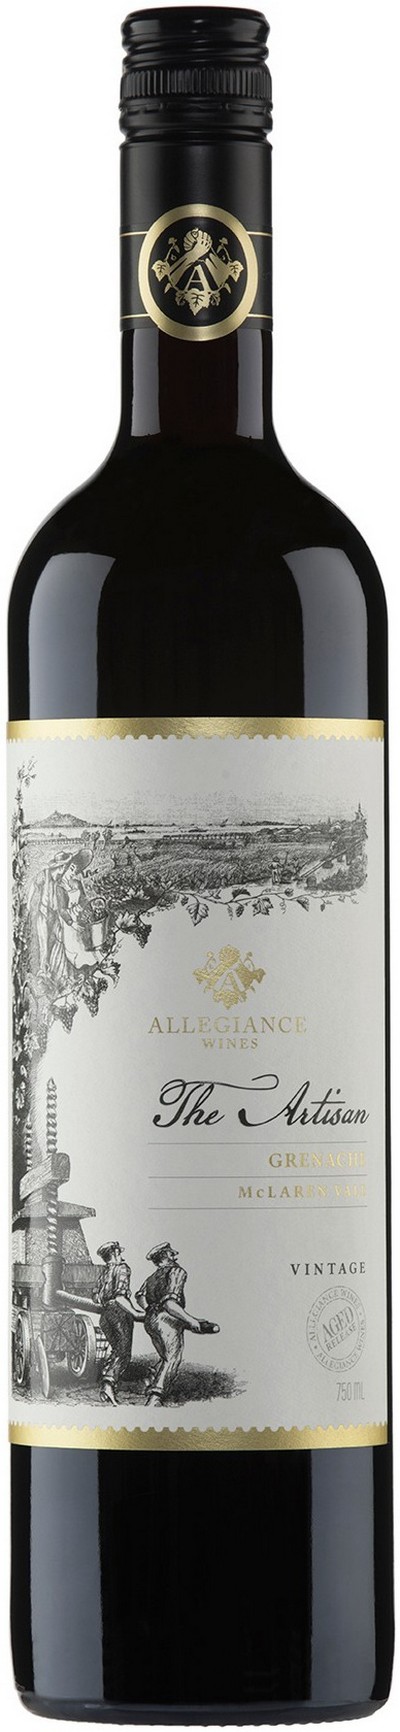 allegiance-wines-the-artisan-mclaren-vale-grenache-2017